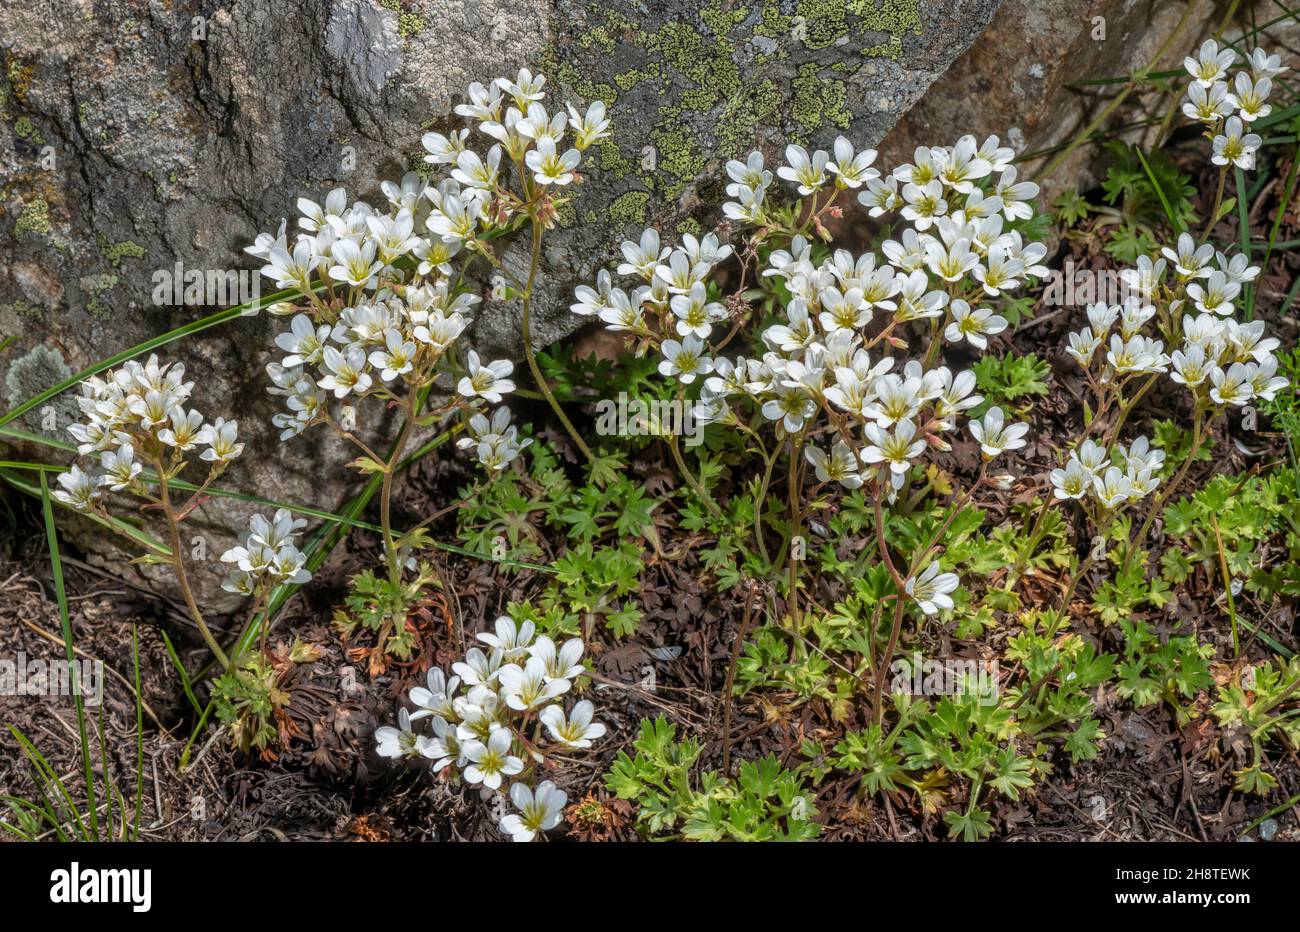 Geranium-like saxifrage, Saxifraga geranioides, in flower in the Pyrenees. Stock Photo